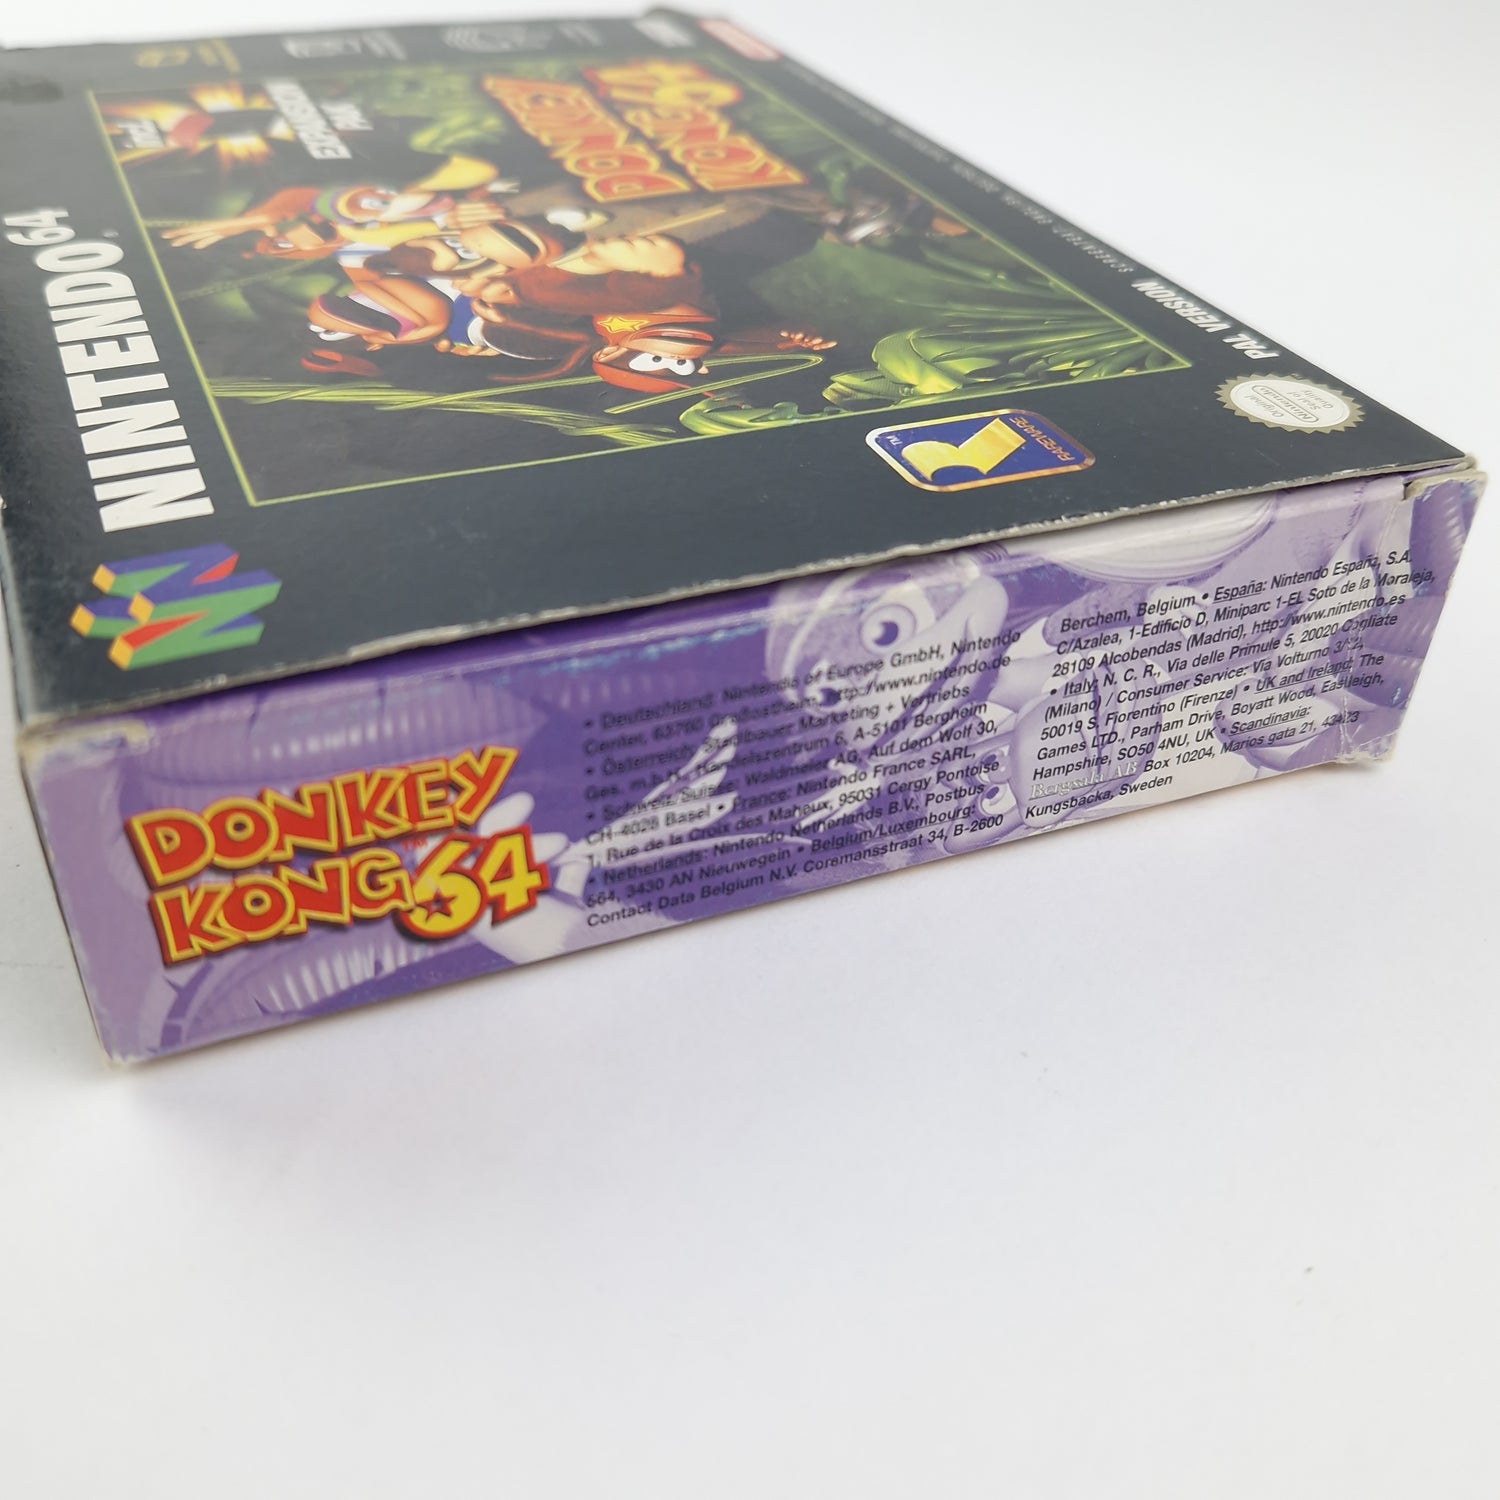 Nintendo 64 Game: Donkey Kong 64 - Module Instructions OVP / PAL N64 Game